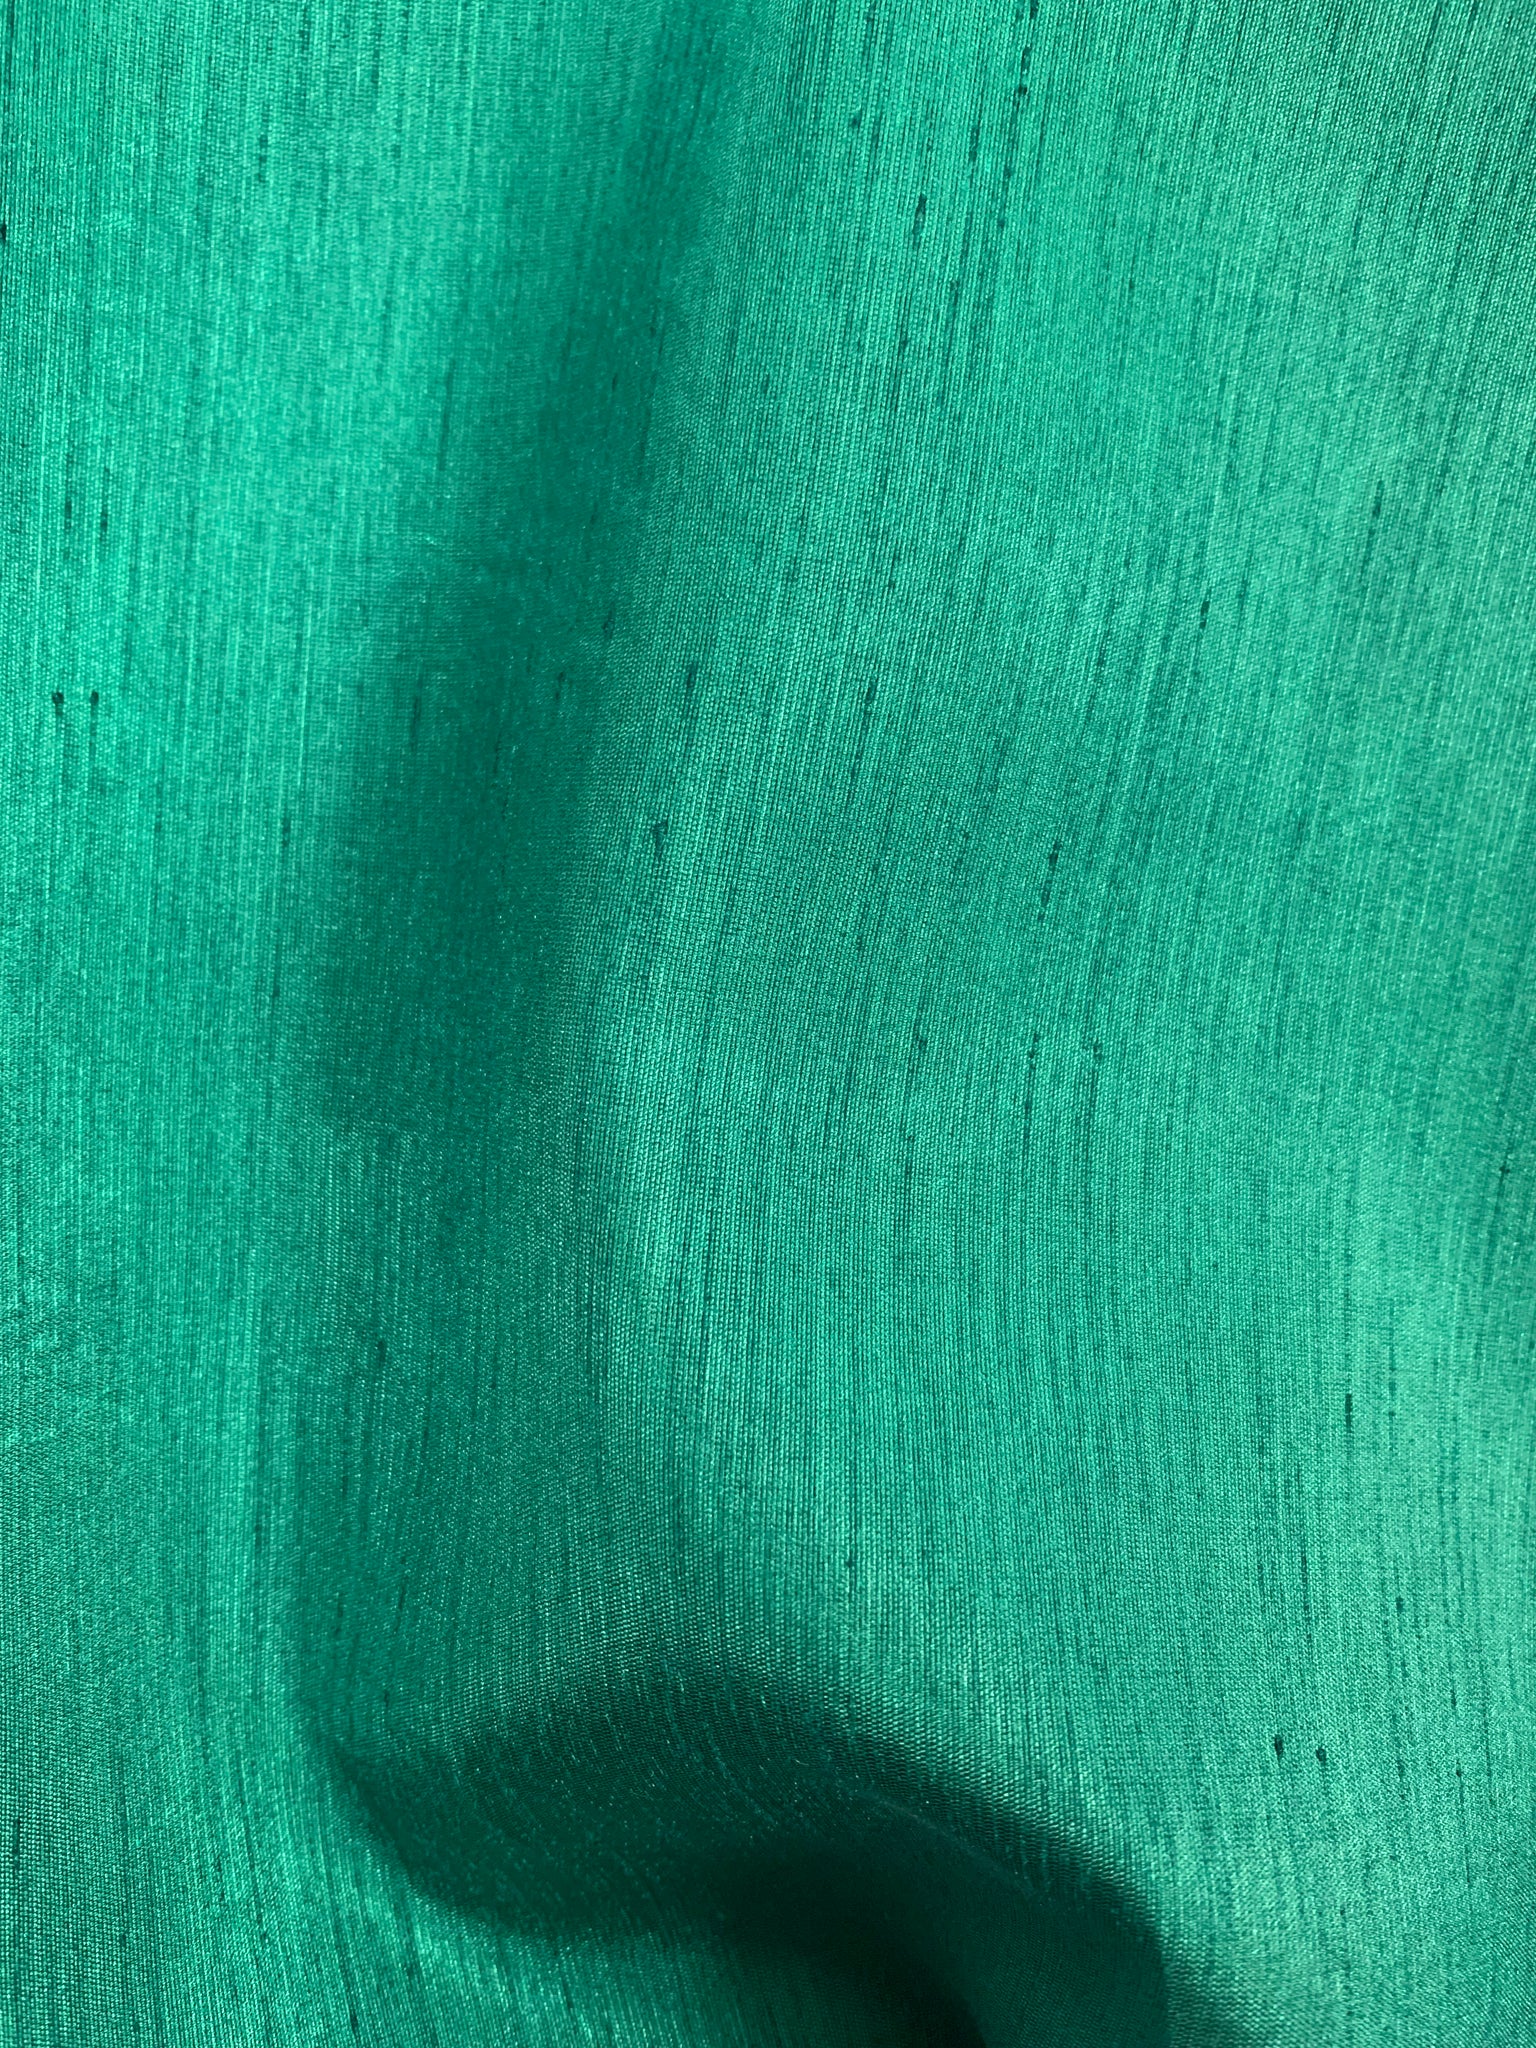 Dupioni Emerald Green Premium Table Linen